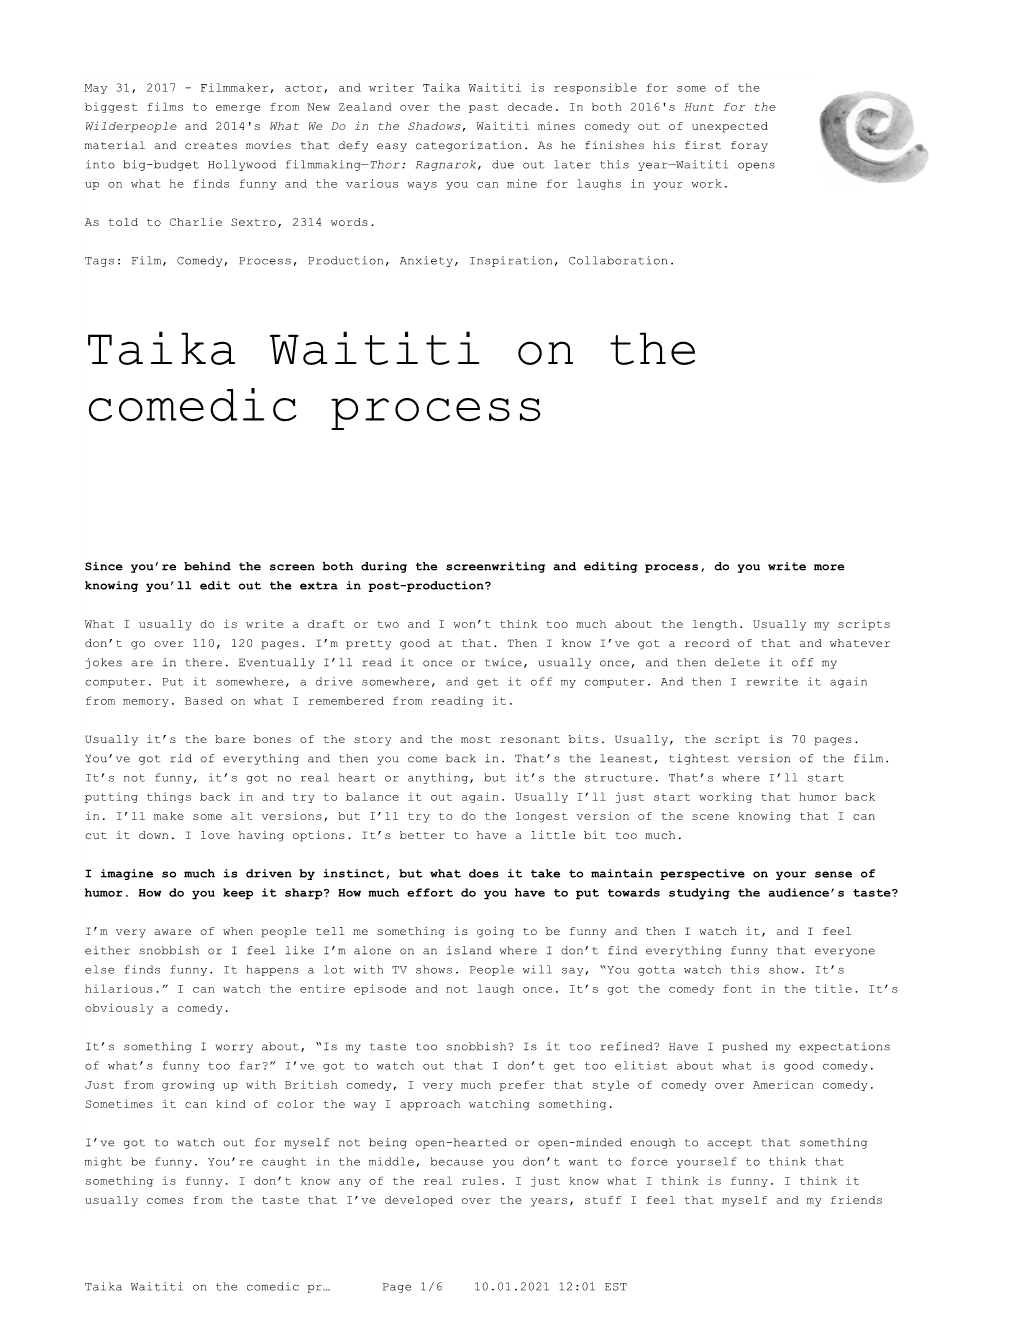 Taika Waititi on the Comedic Process